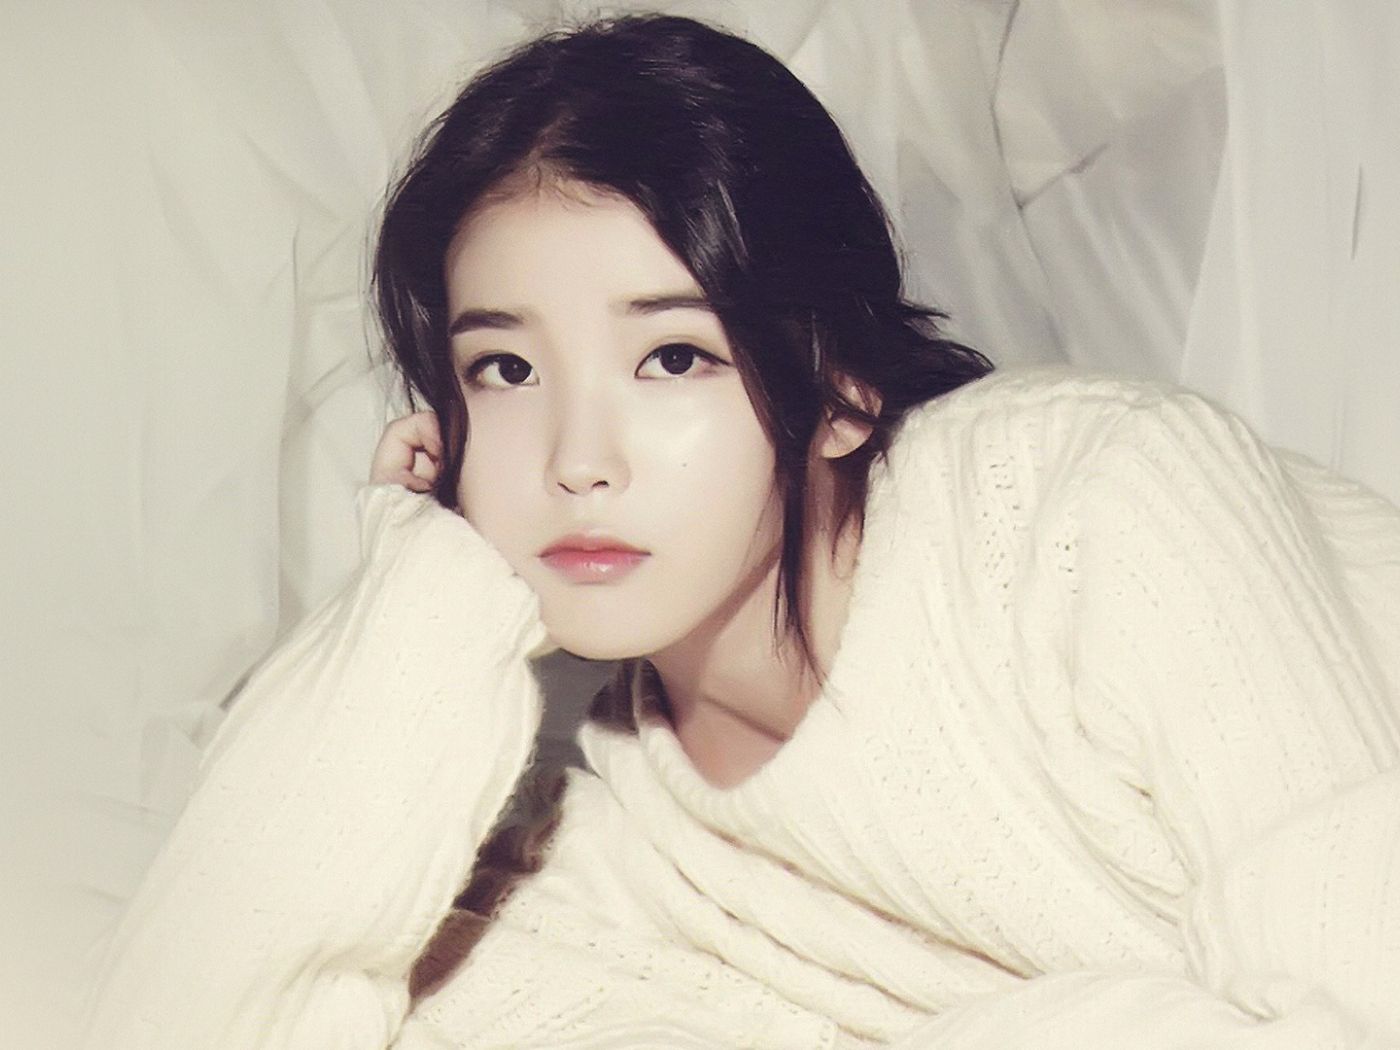 Desktop Wallpaper Lee Ji Eun (Iu), A South Korean Pop Singer, HD Image, Picture, Background, 5f9qgc